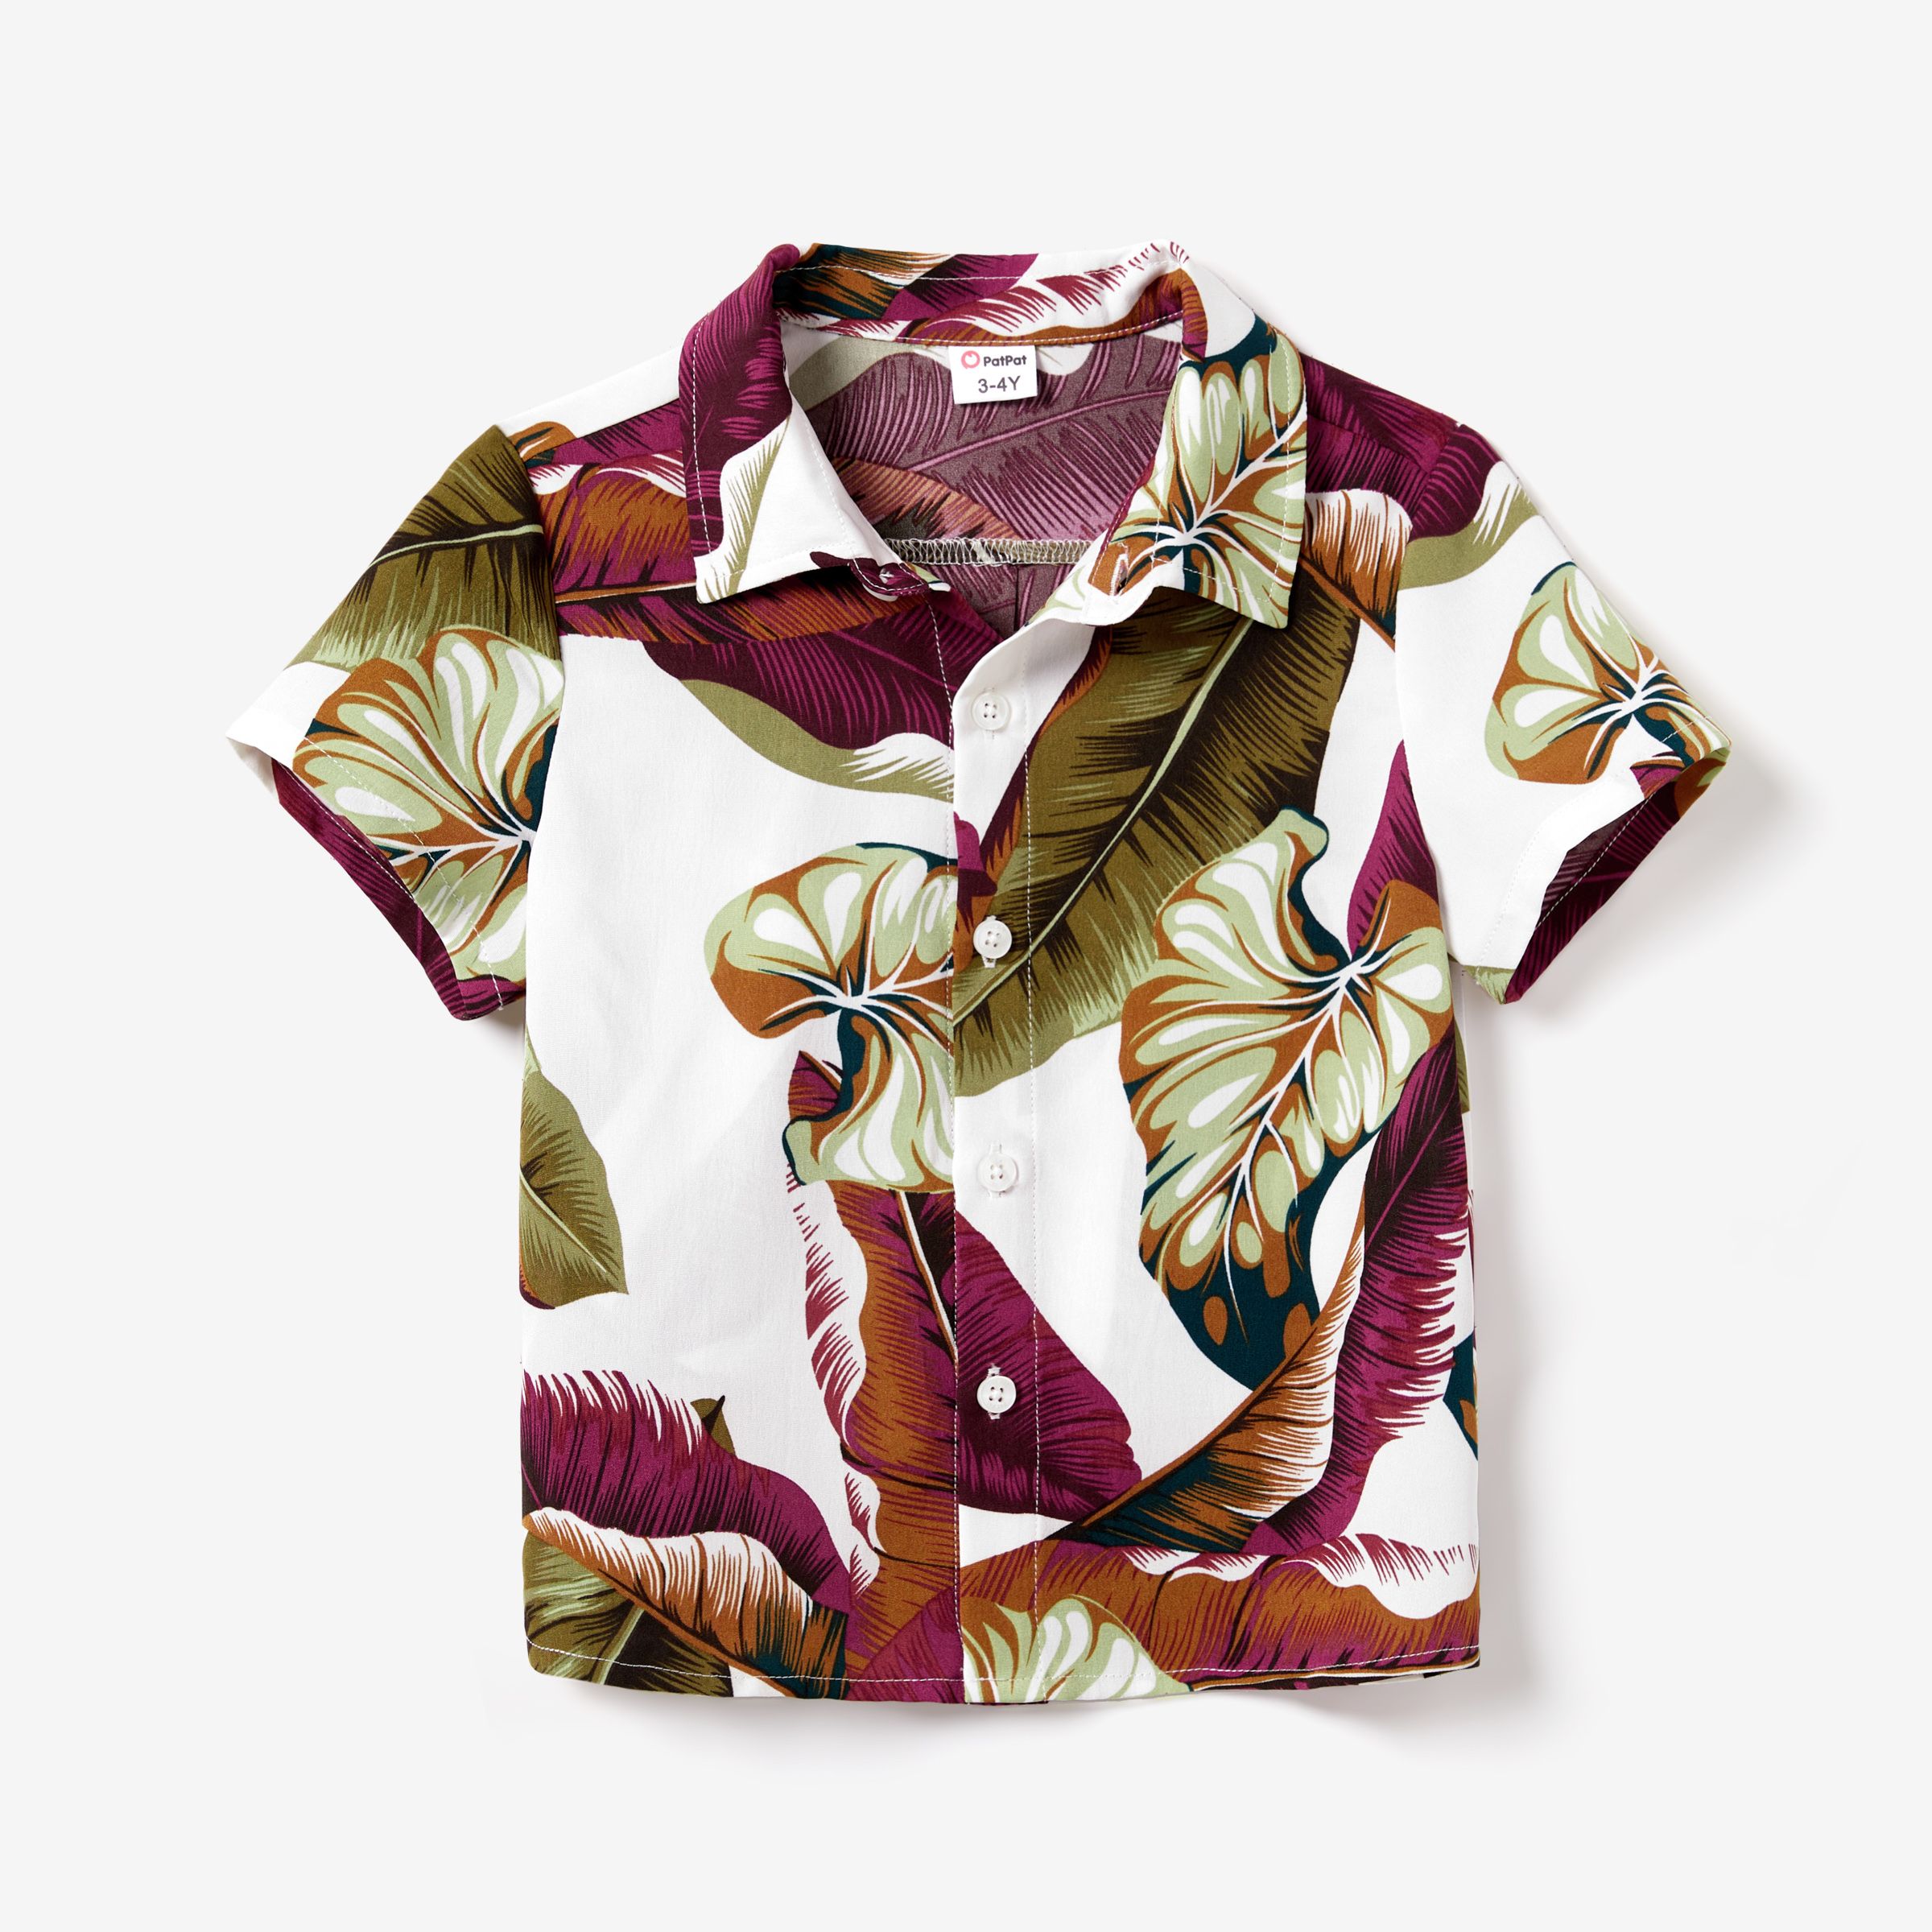 Family Matching Allover Leaf Print High Neck Halter Dress And Beach Shirt Sets